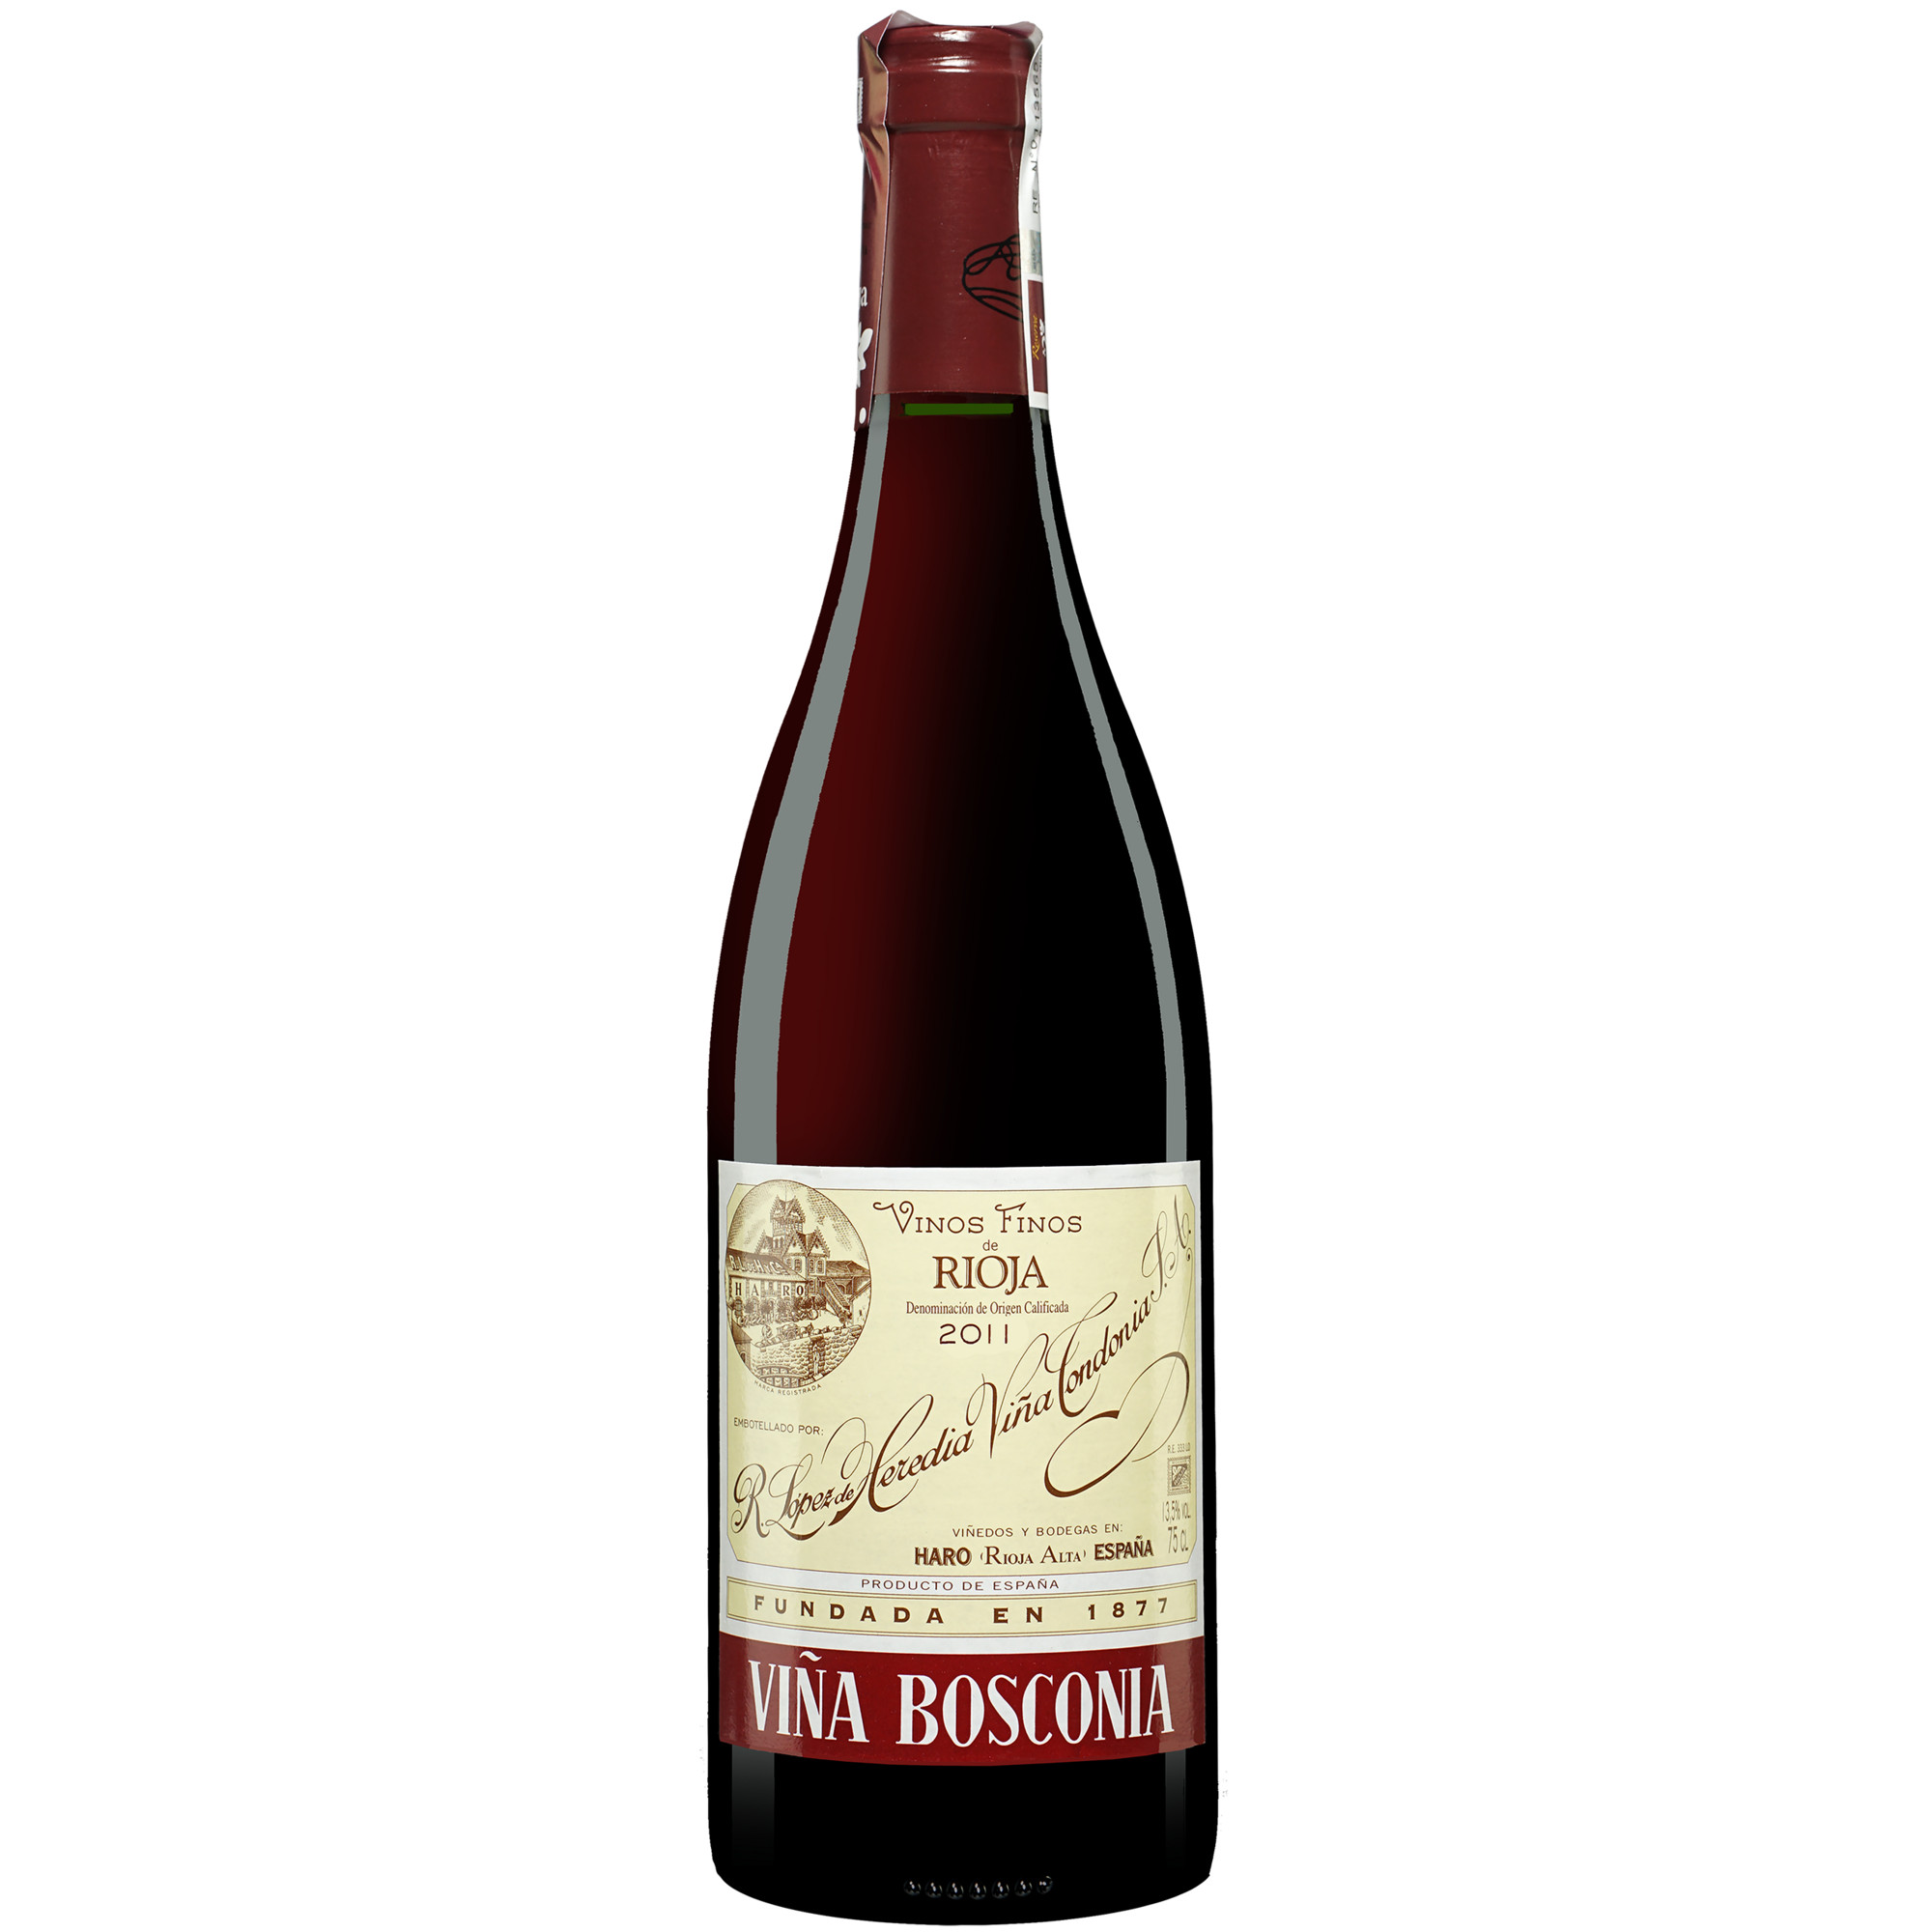 Image of Tondonia »Viña Bosconia« Tinto Reserva 2011 0.75L 13.5% Vol. Rotwein Trocken aus Spanien